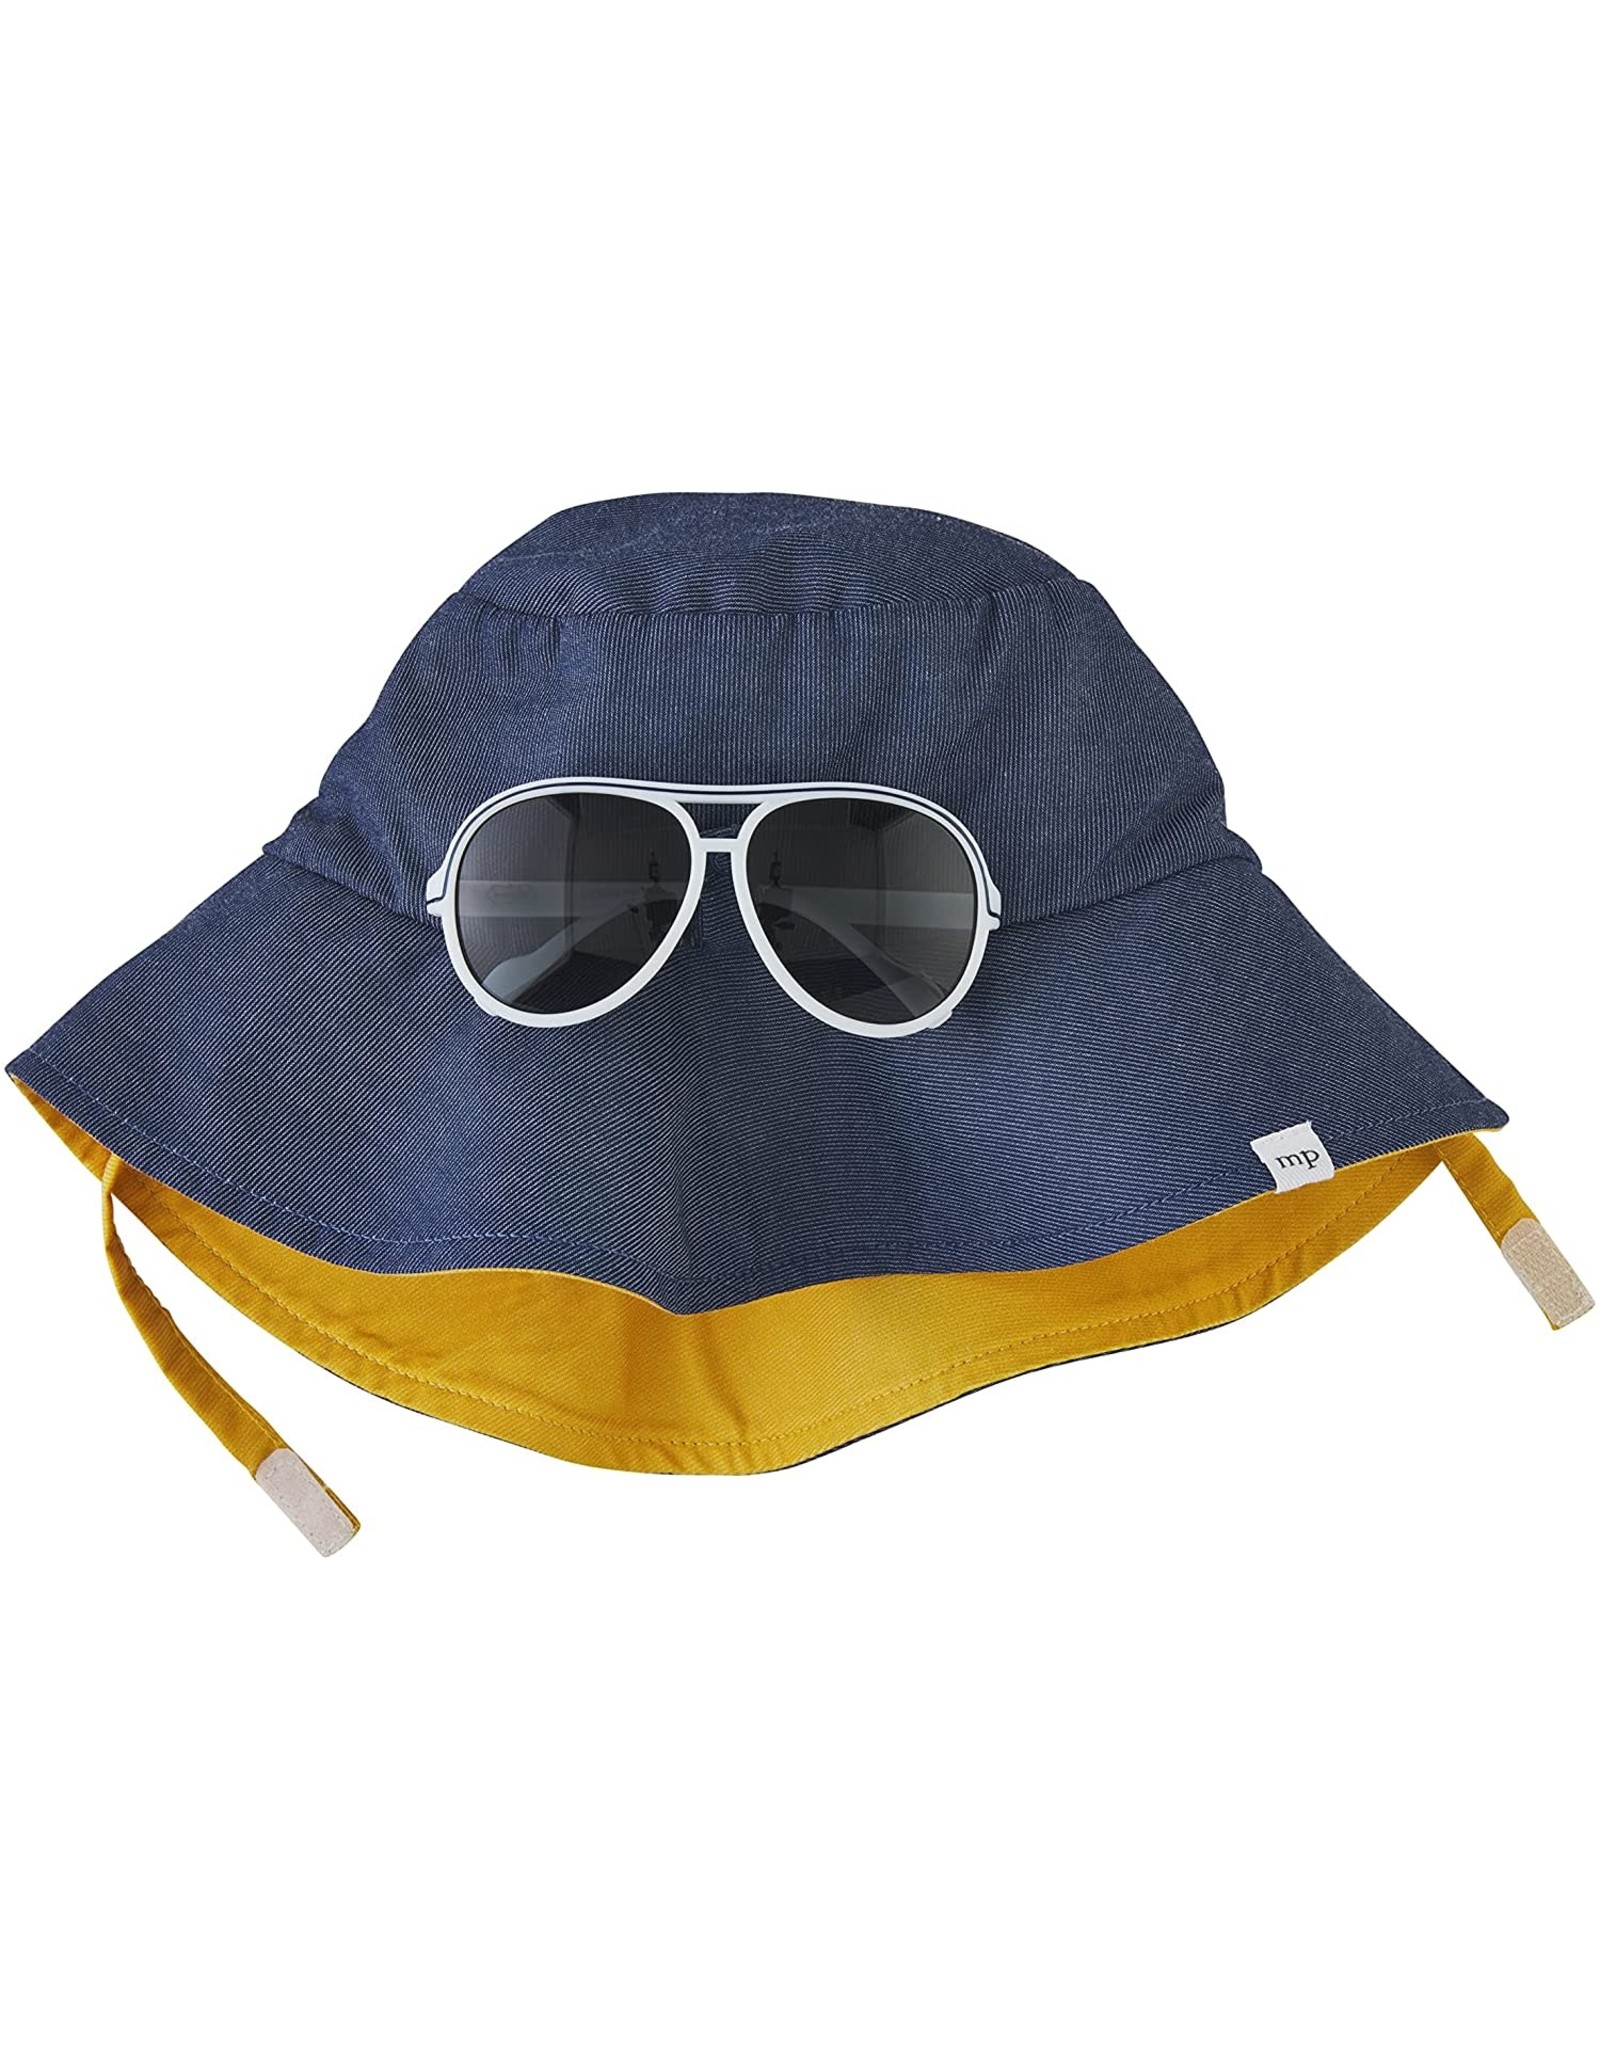 Mud Pie Toddler Navy Blue Bucket Sun Hat and Sunglass Set